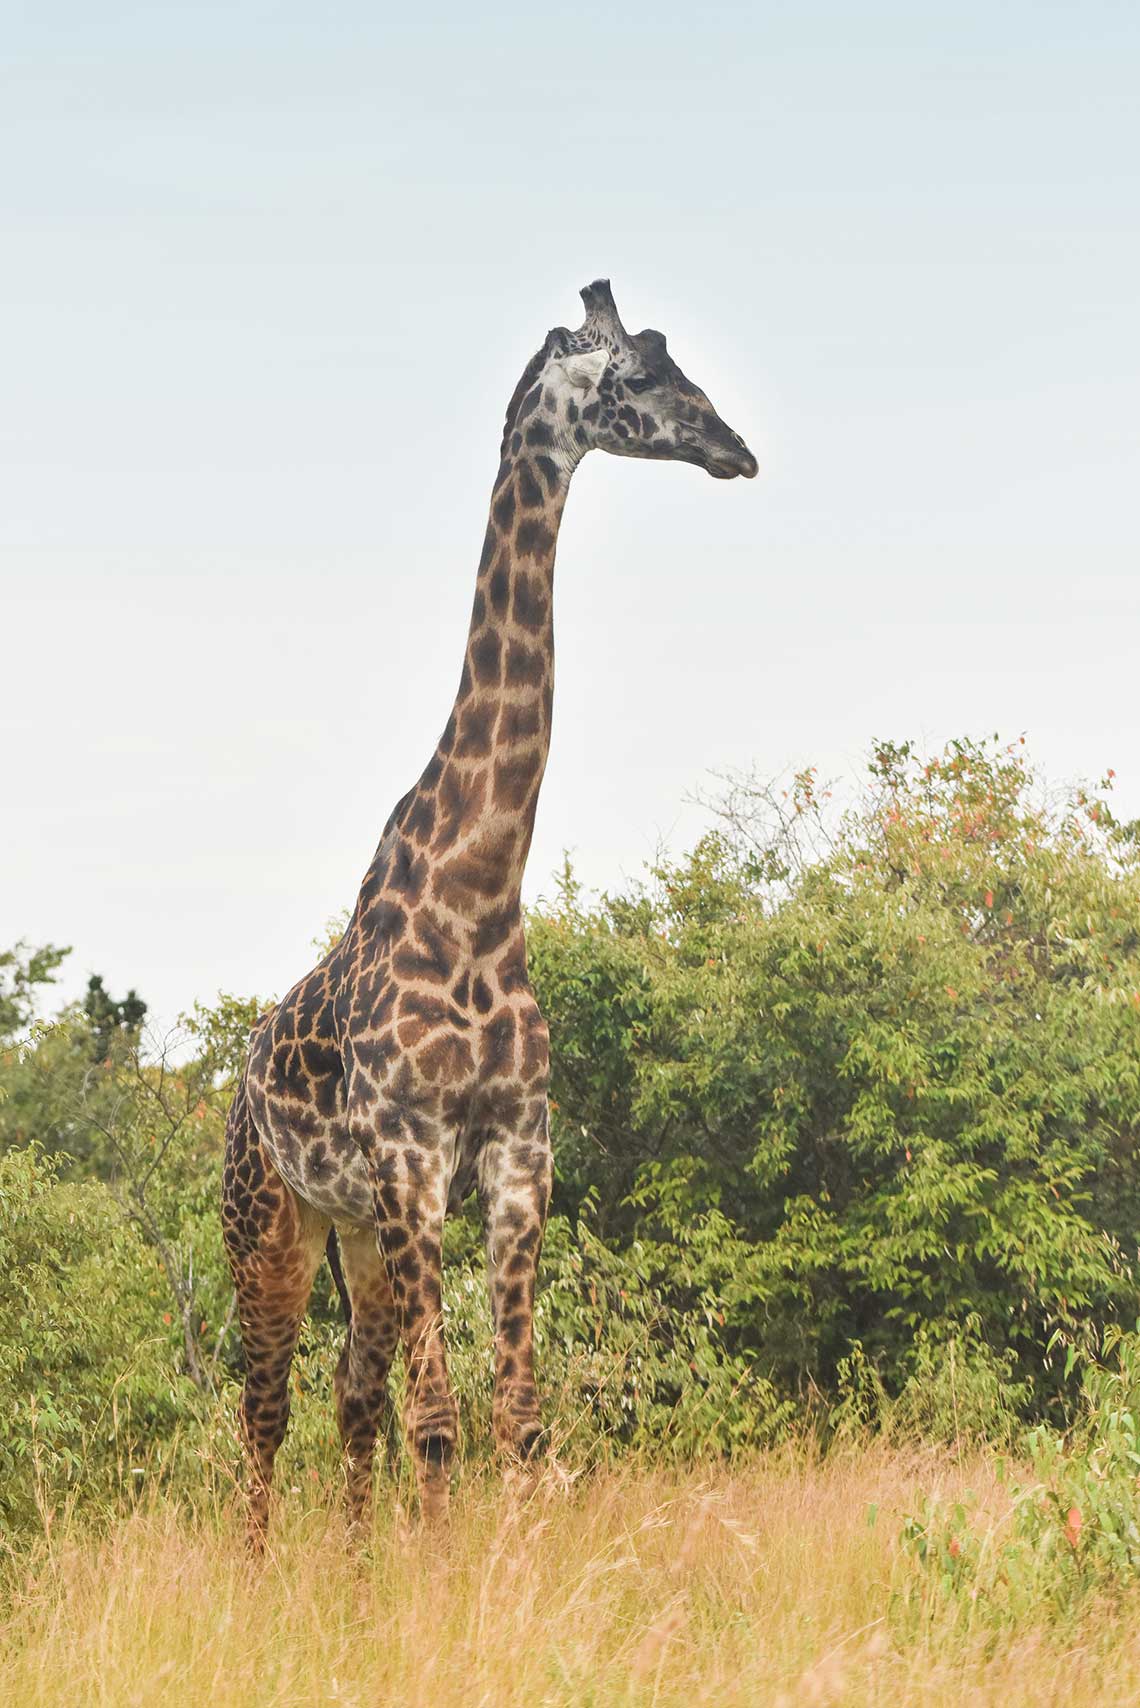 Giraffe - Bisakha Datta Photography - High resolution image Free Download